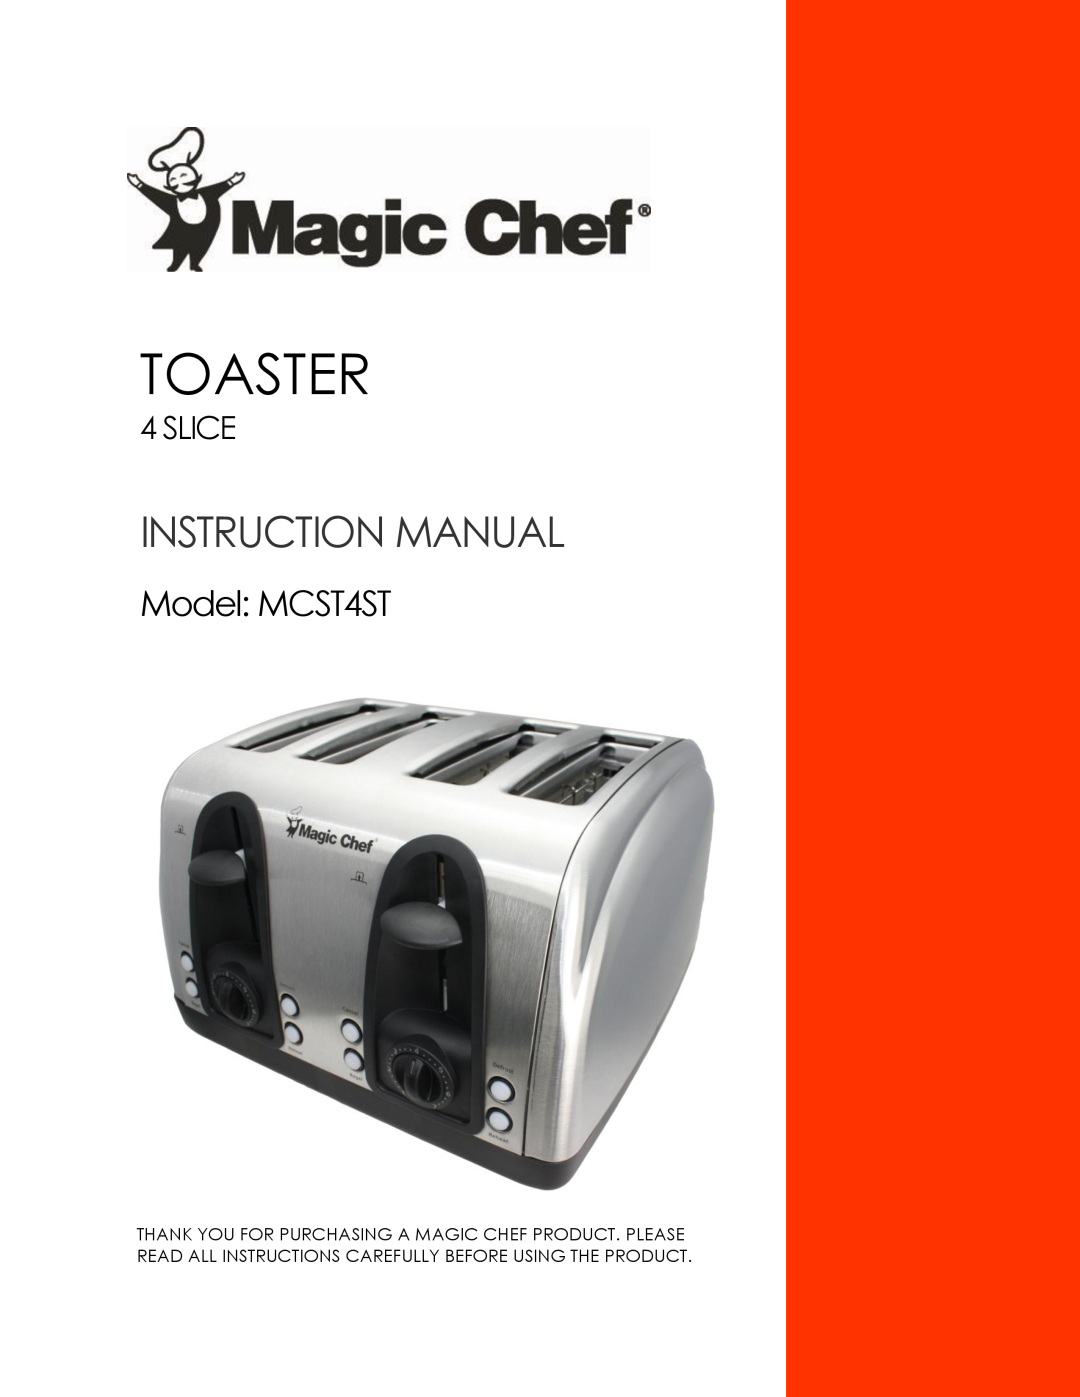 Magic Chef instruction manual Toaster, Model MCST4ST, Slice 